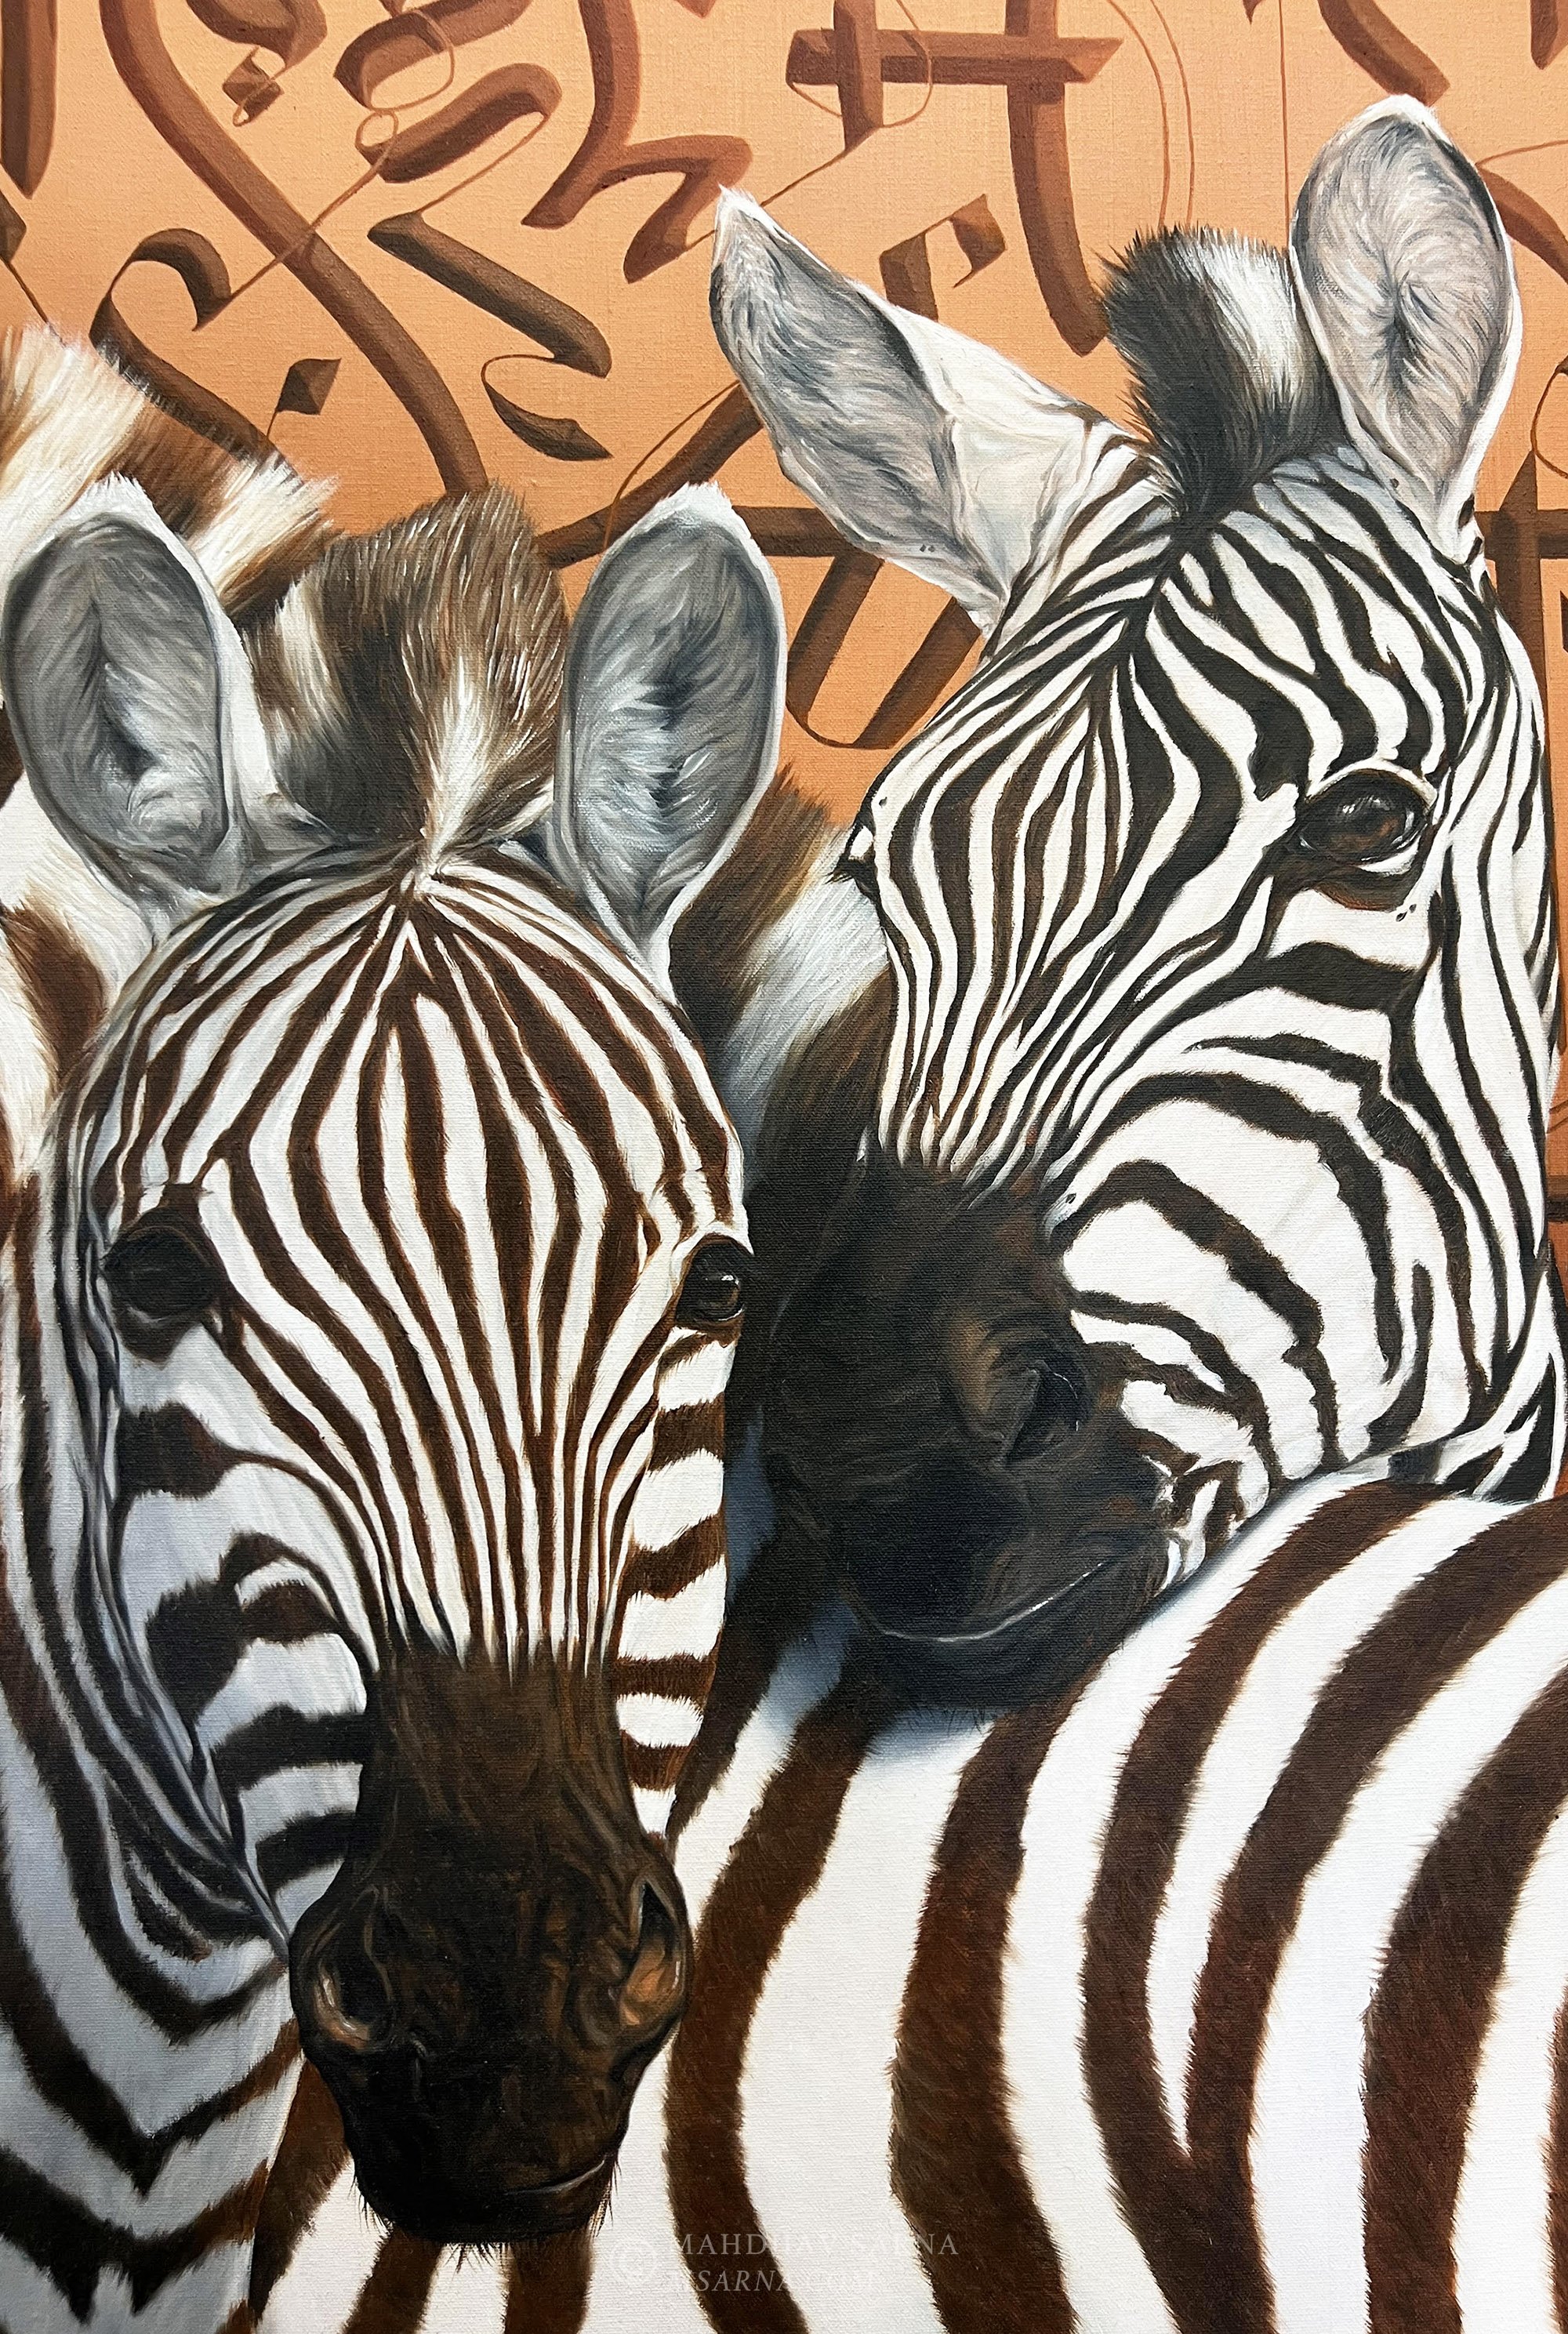 zebra calligraphy oil painting thdd wildlife art mahdhav sarna 03.jpg